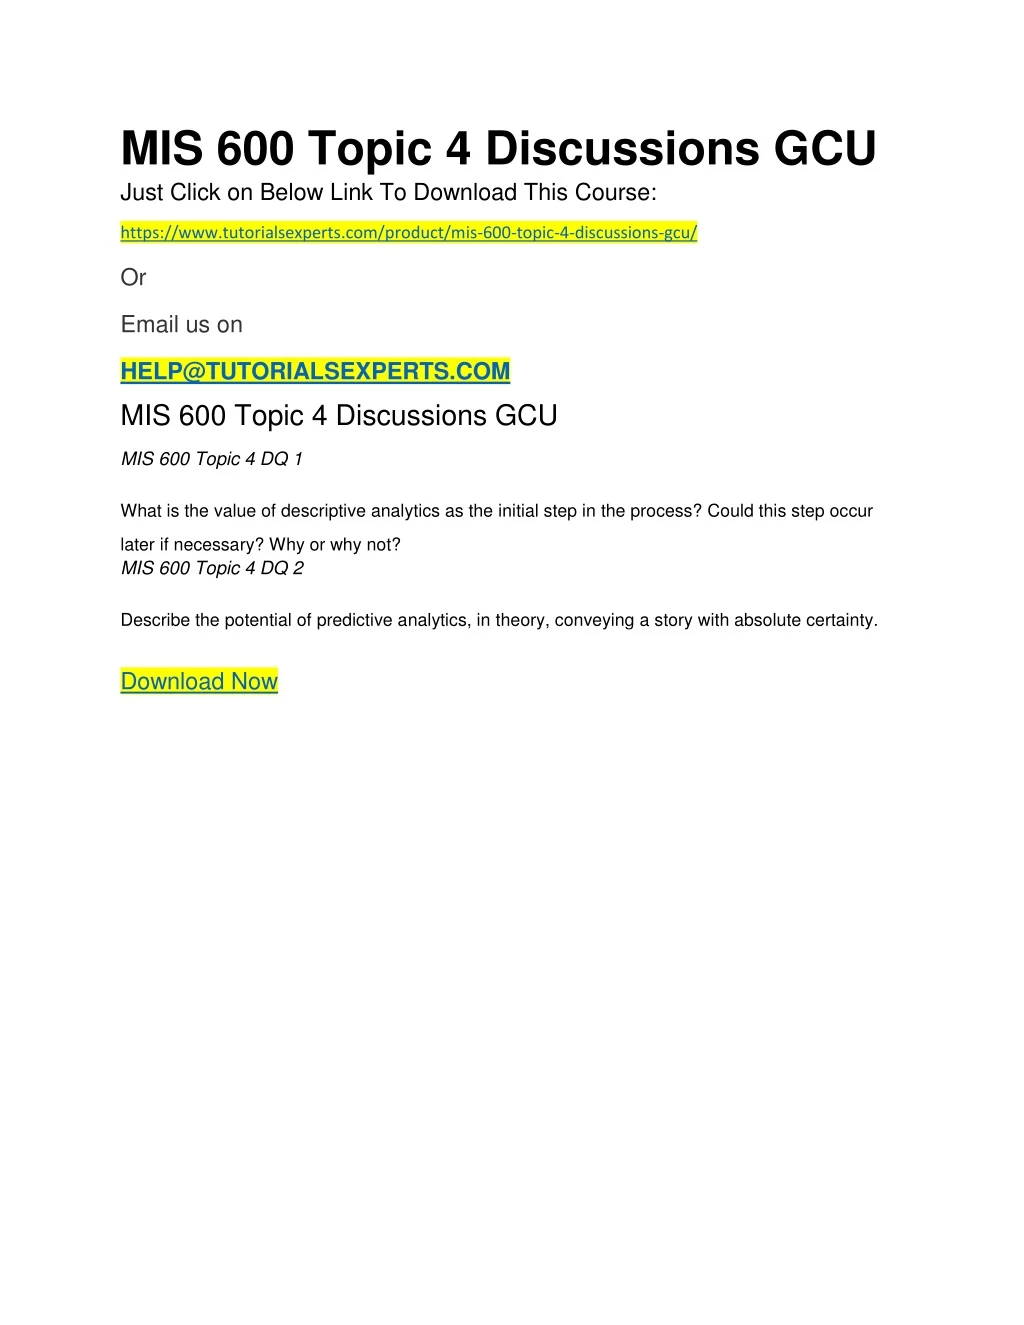 mis 600 topic 4 discussions gcu just click